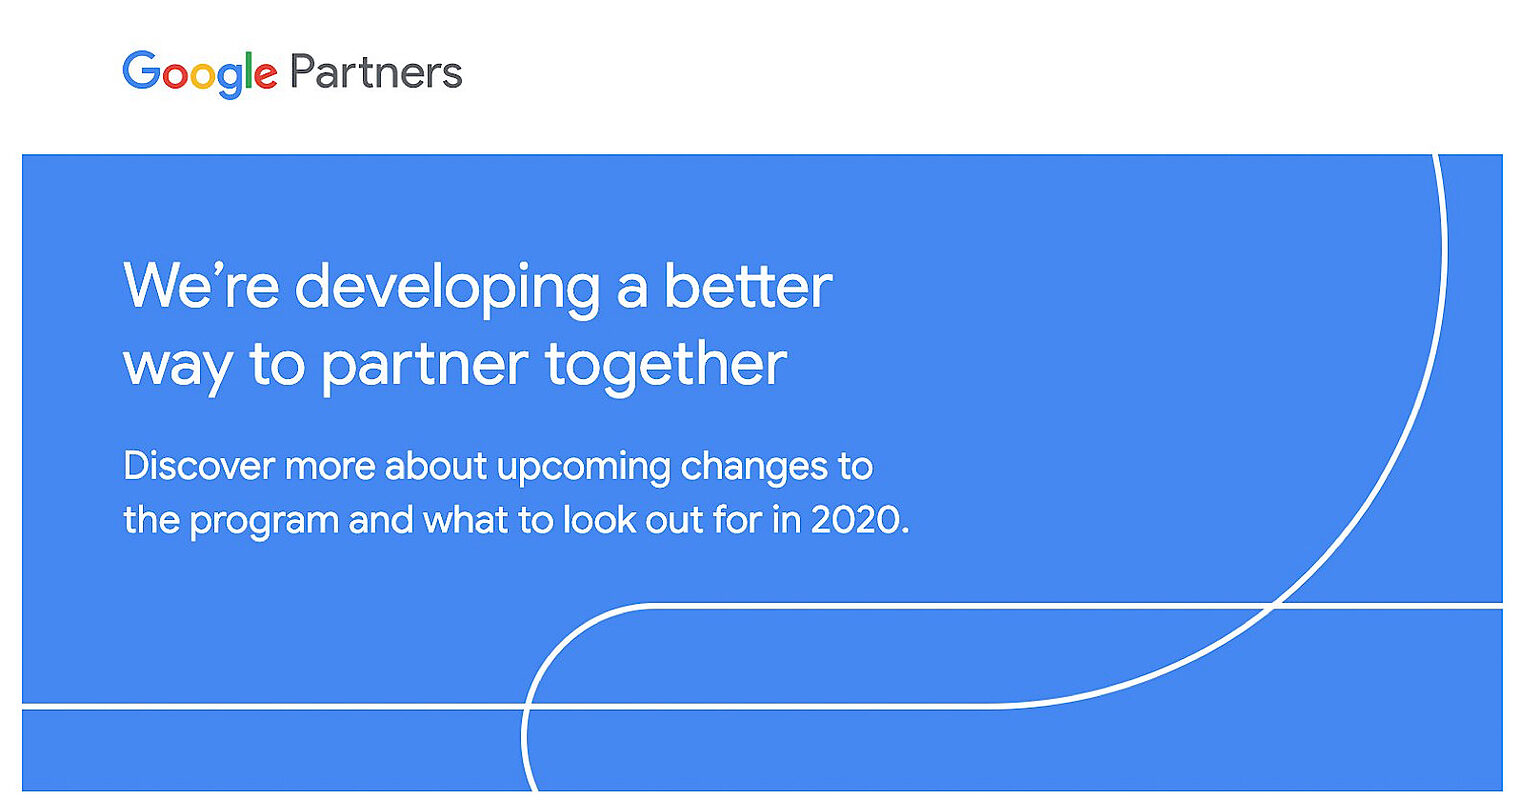 Google Partners Program Puts New Requirements on Companies